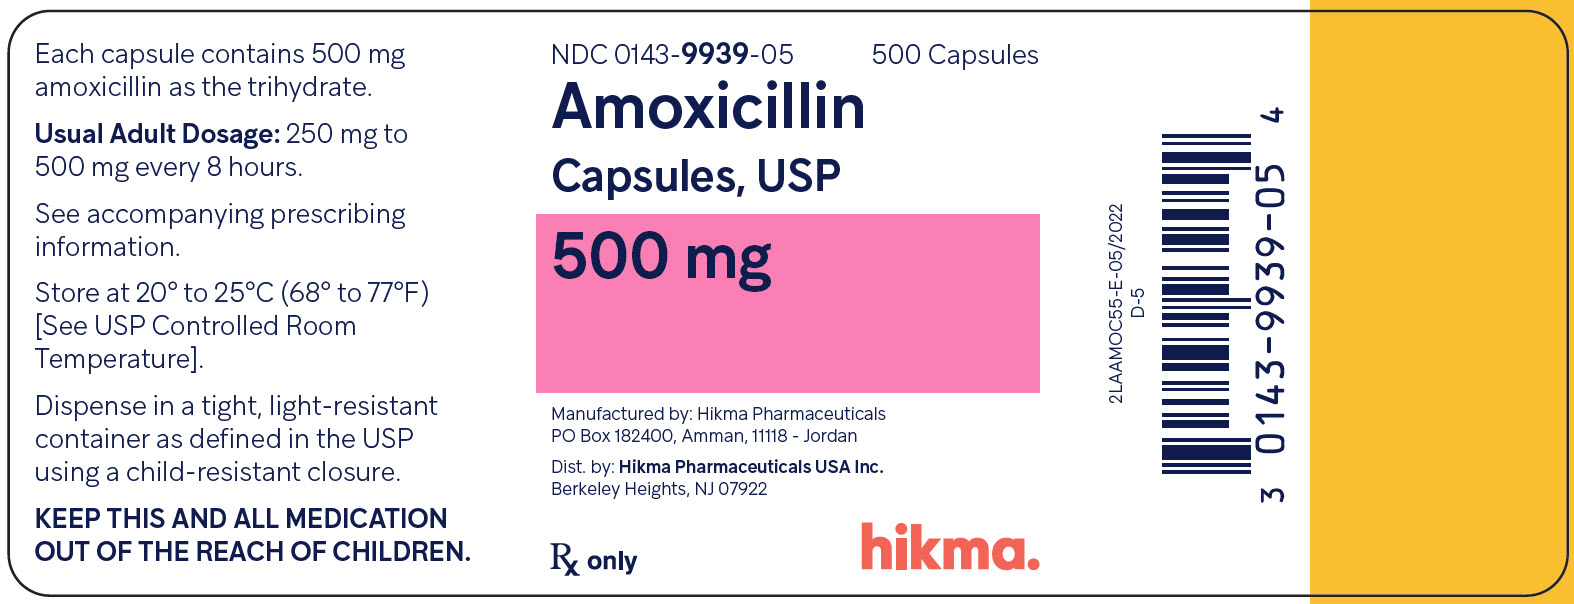 Amoxicillin Caps, USP 500 mg (500s) bottle label